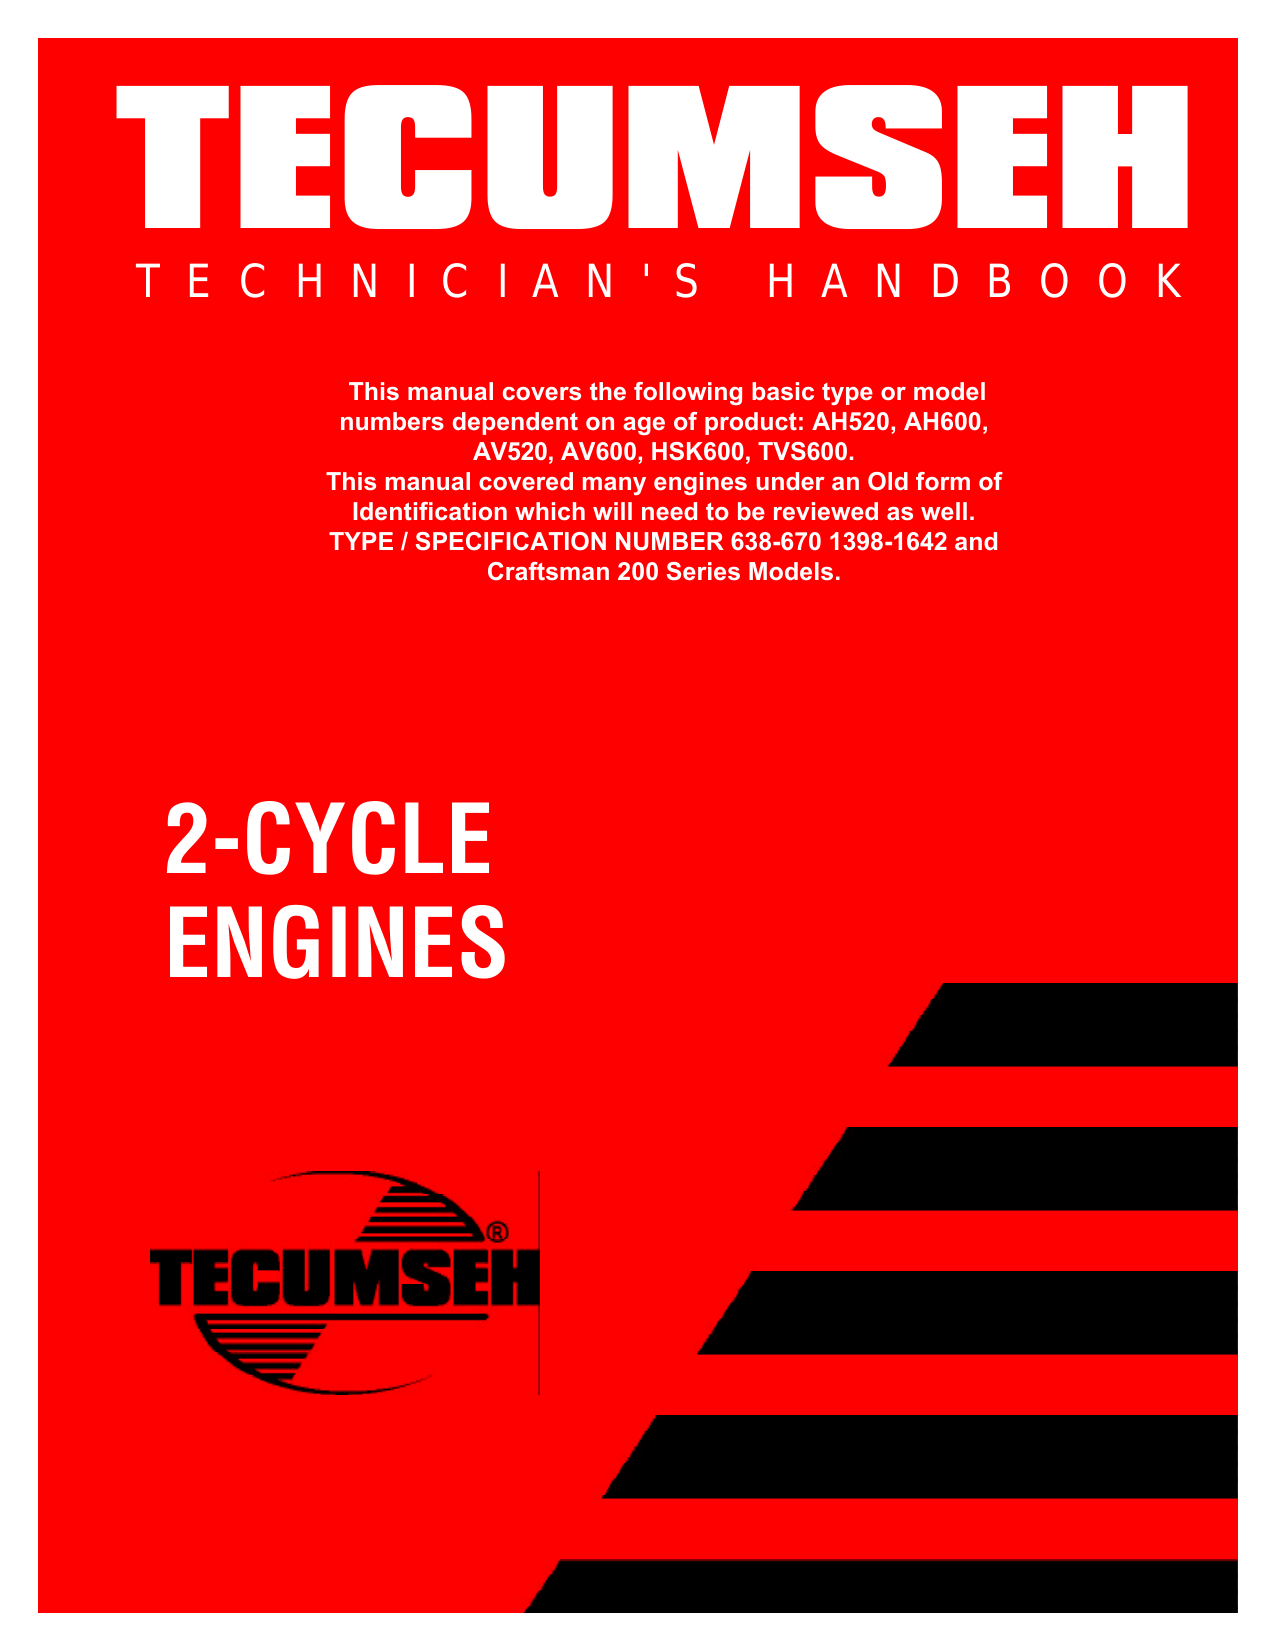 Tecumseh Craftsman, AH520, AH600, AV520, AV600, HSK600, TVS600, Craftsman 200 series engine technicans handbook Preview image 1